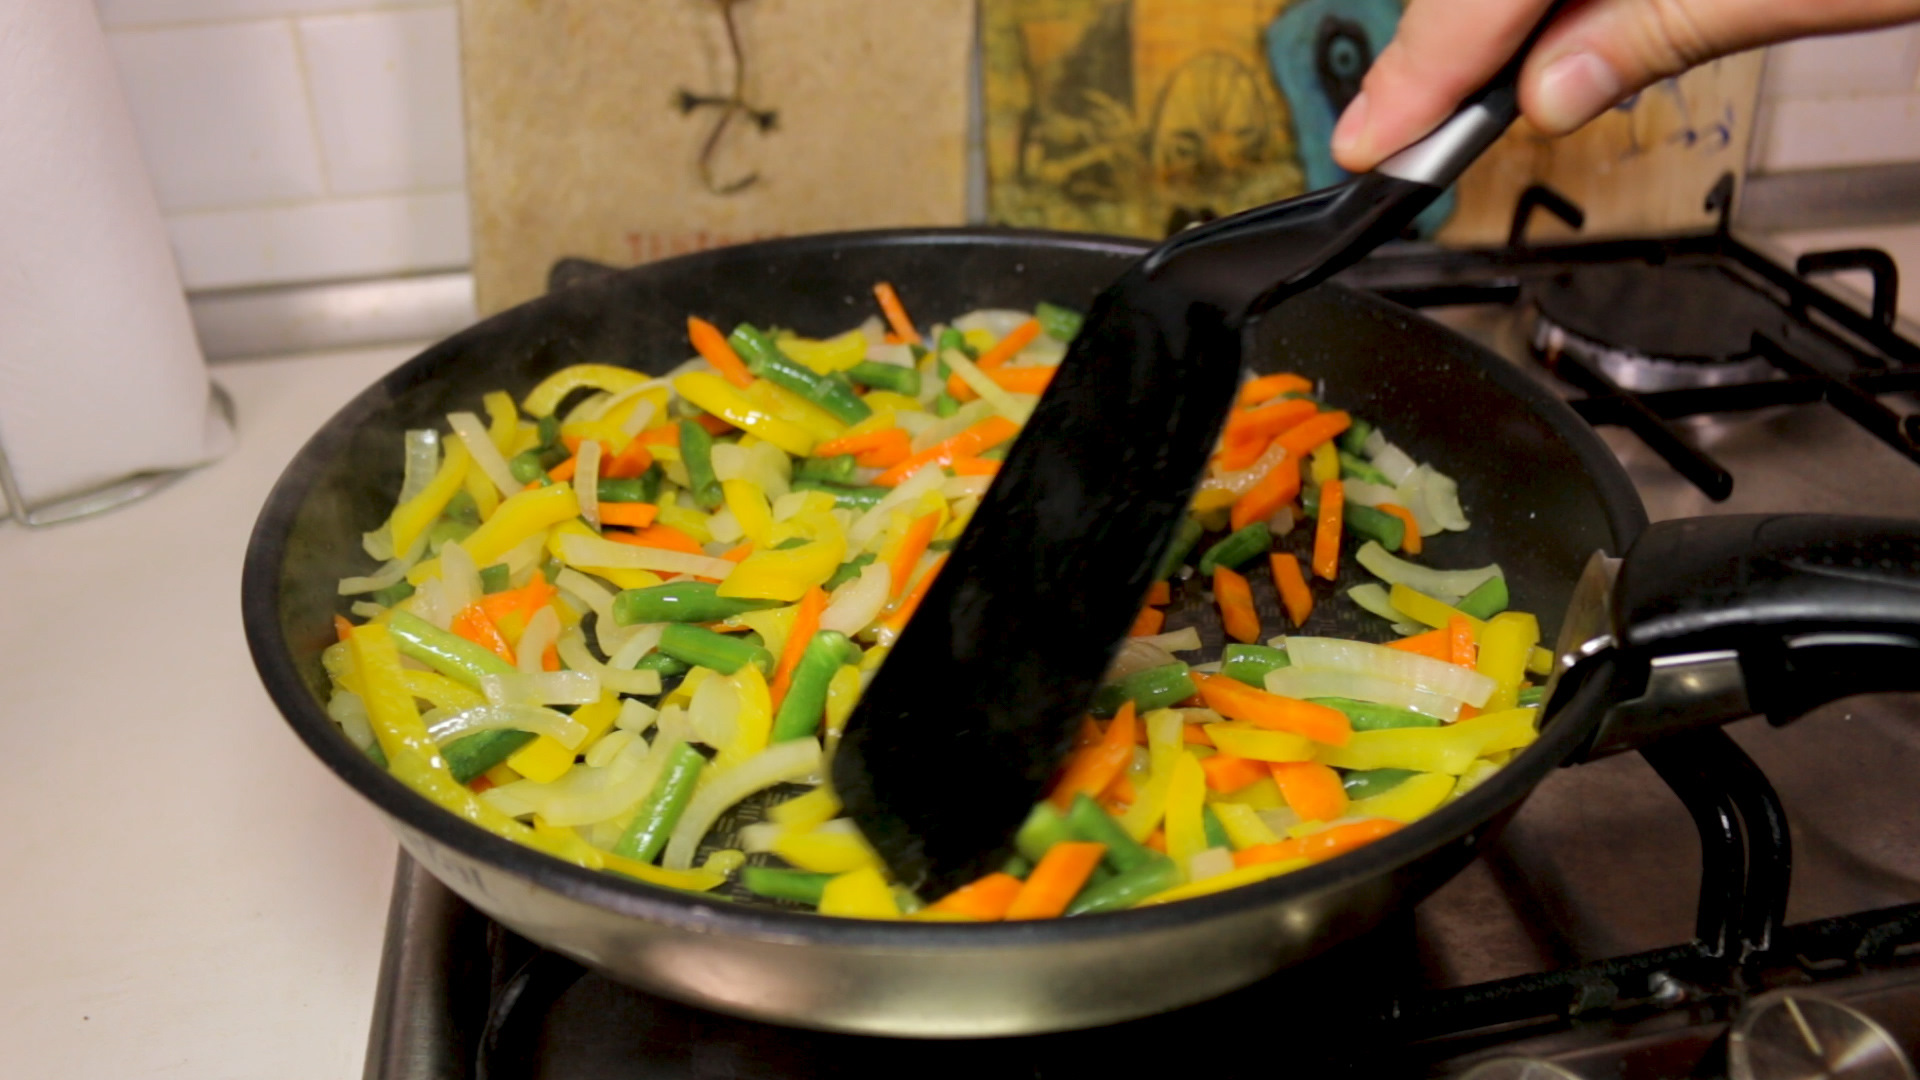 Рецепт горбуши с овощами на сковороде. Горбуша на сковороде сочная. Горбуша с луком и морковью на сковороде. Горбуша в сливках на сковороде. Горбуша тушеная в сливочном масле и луком.